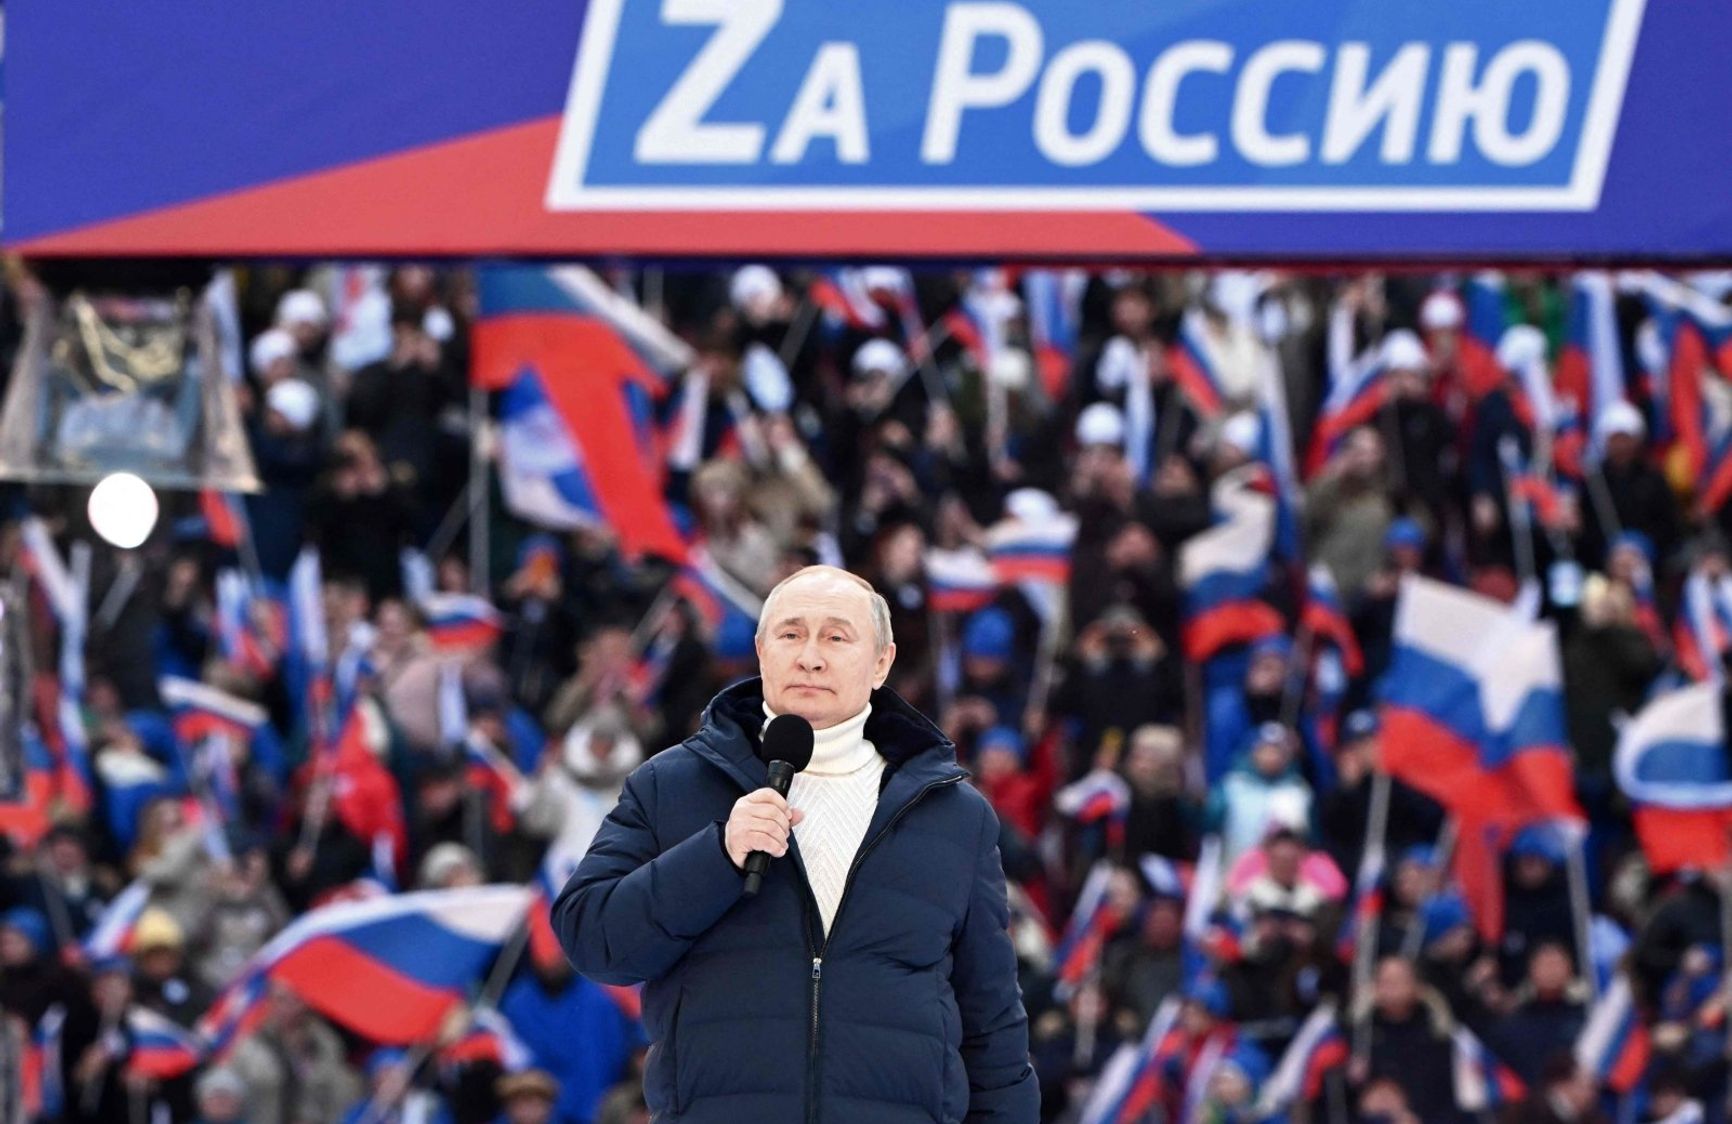 Putin wearing a Loro Piana jacket costing 1,445,000 rubles